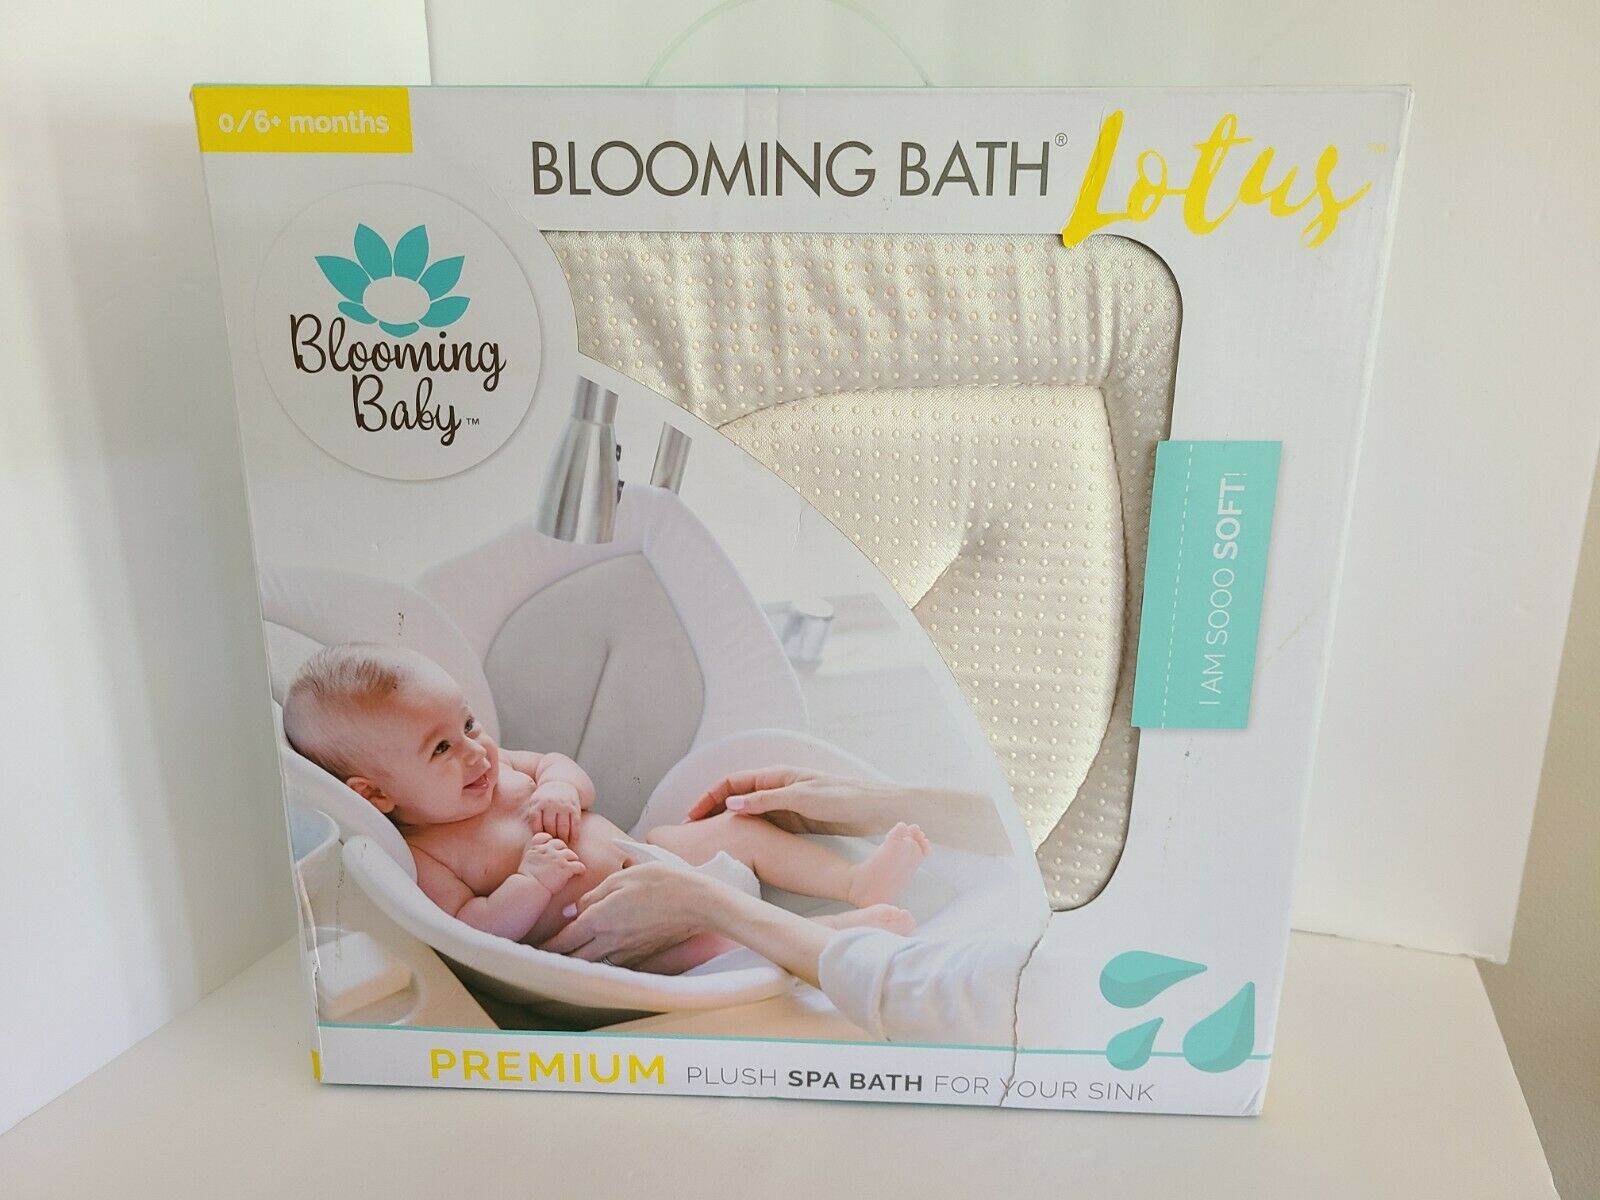 Blooming Bath Lotus 4 Petal Baby Bath - Gray/dark Gray